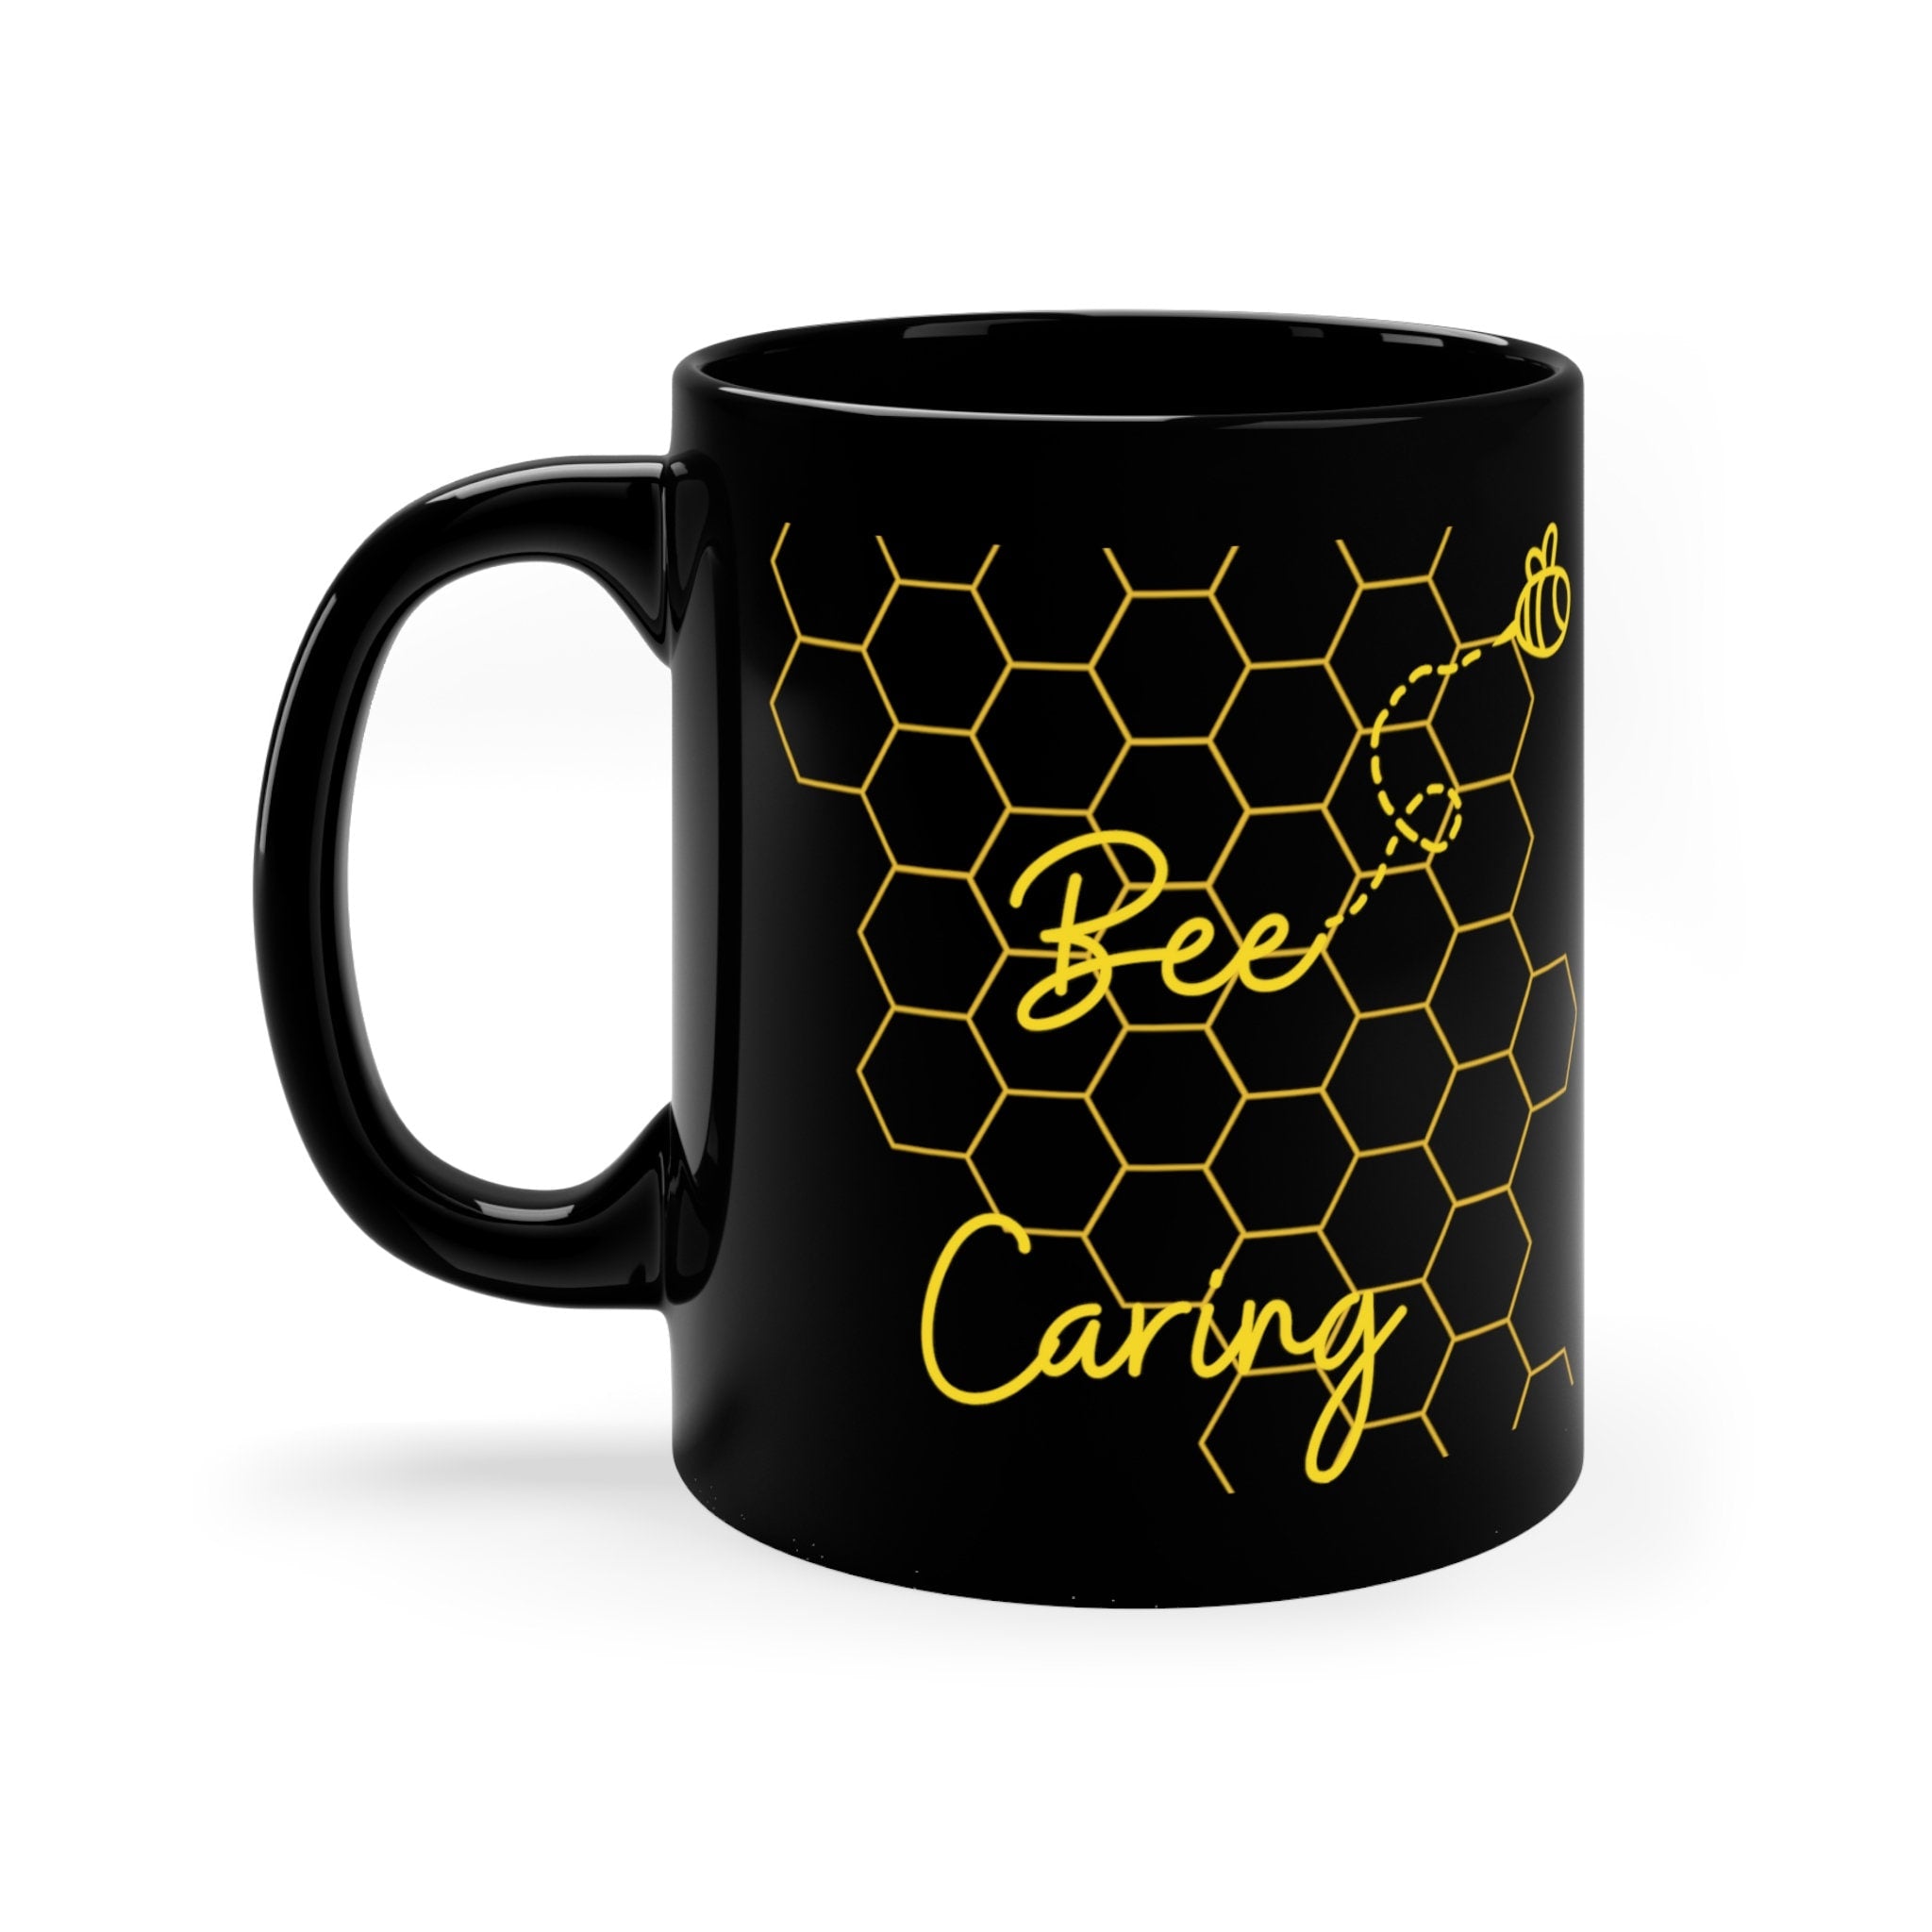 Bee Caring 11oz Black Mug Motivational Cup, Inspirational Saying, Best Friend Gift, Christmas Gift Idea